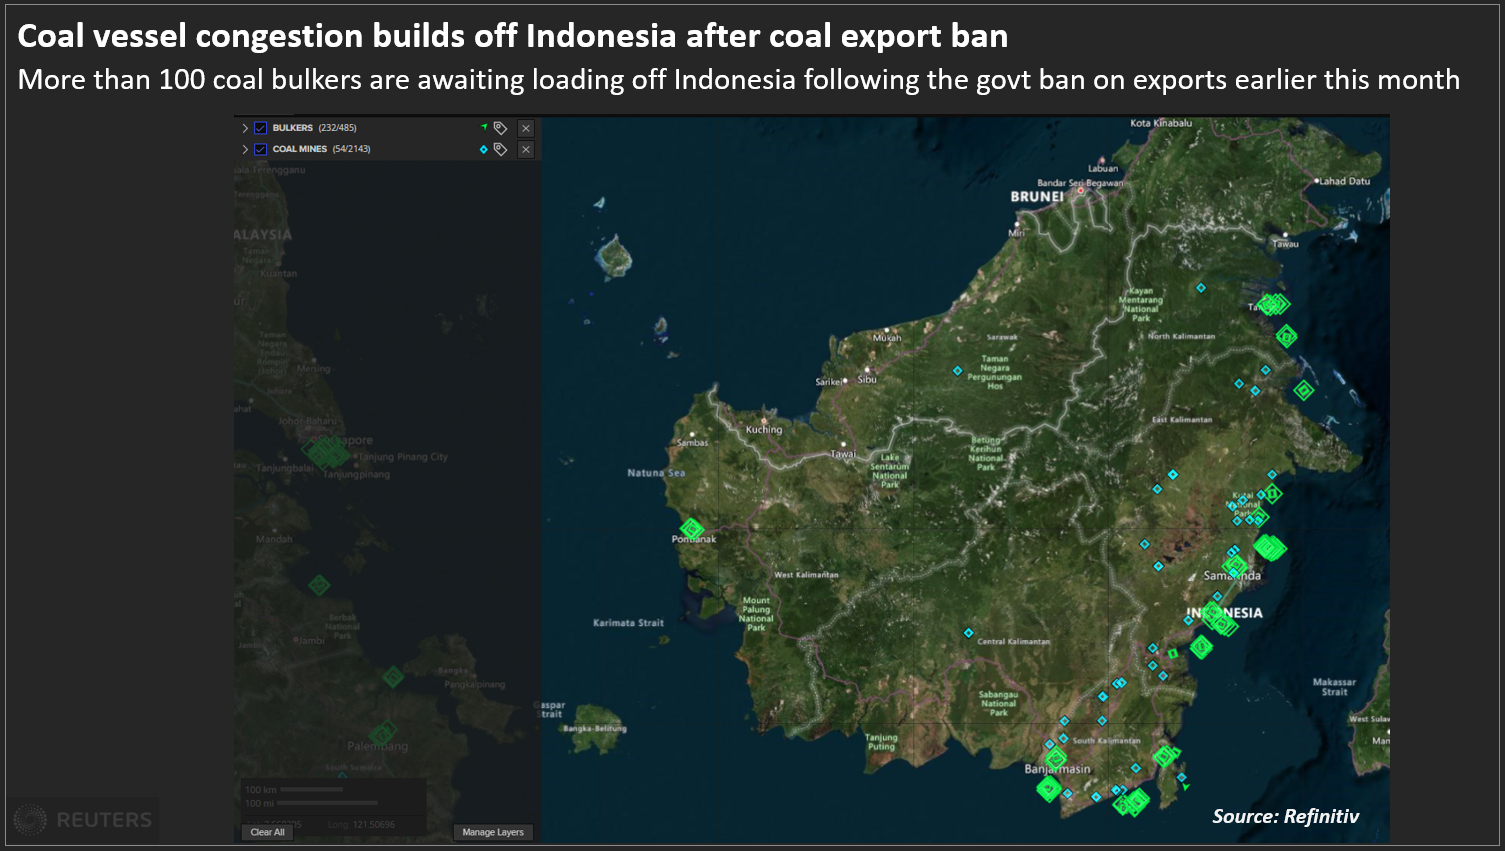 Coal vessel congestion builds off Indonesia after coal export ban